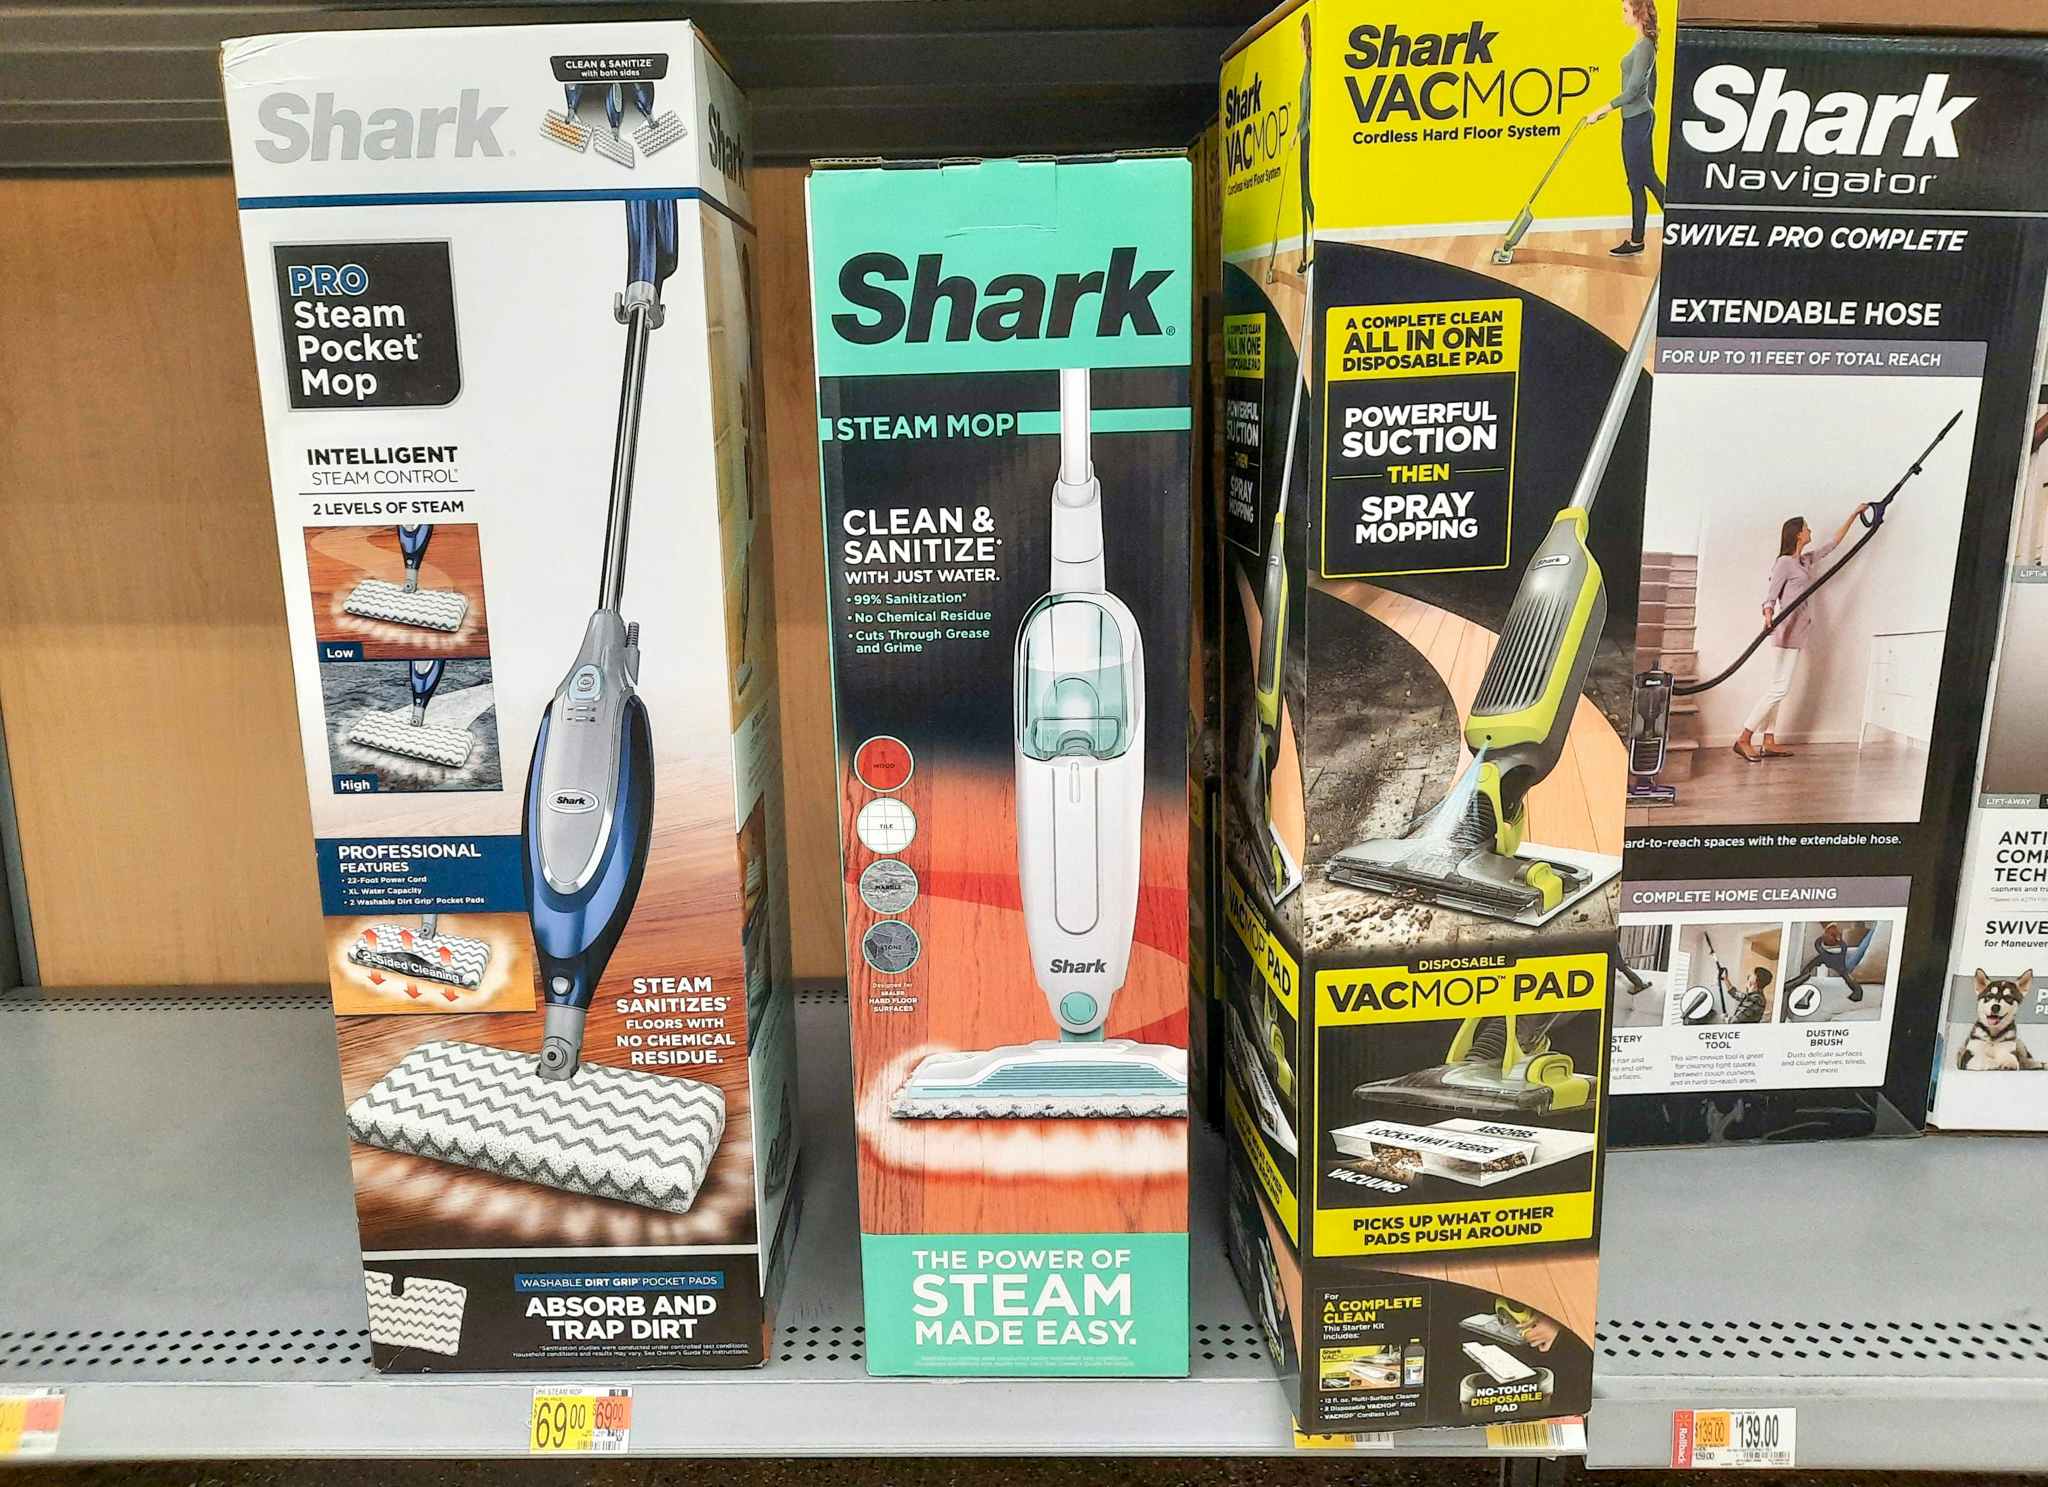 Shark Steam Mop on display at Walmart